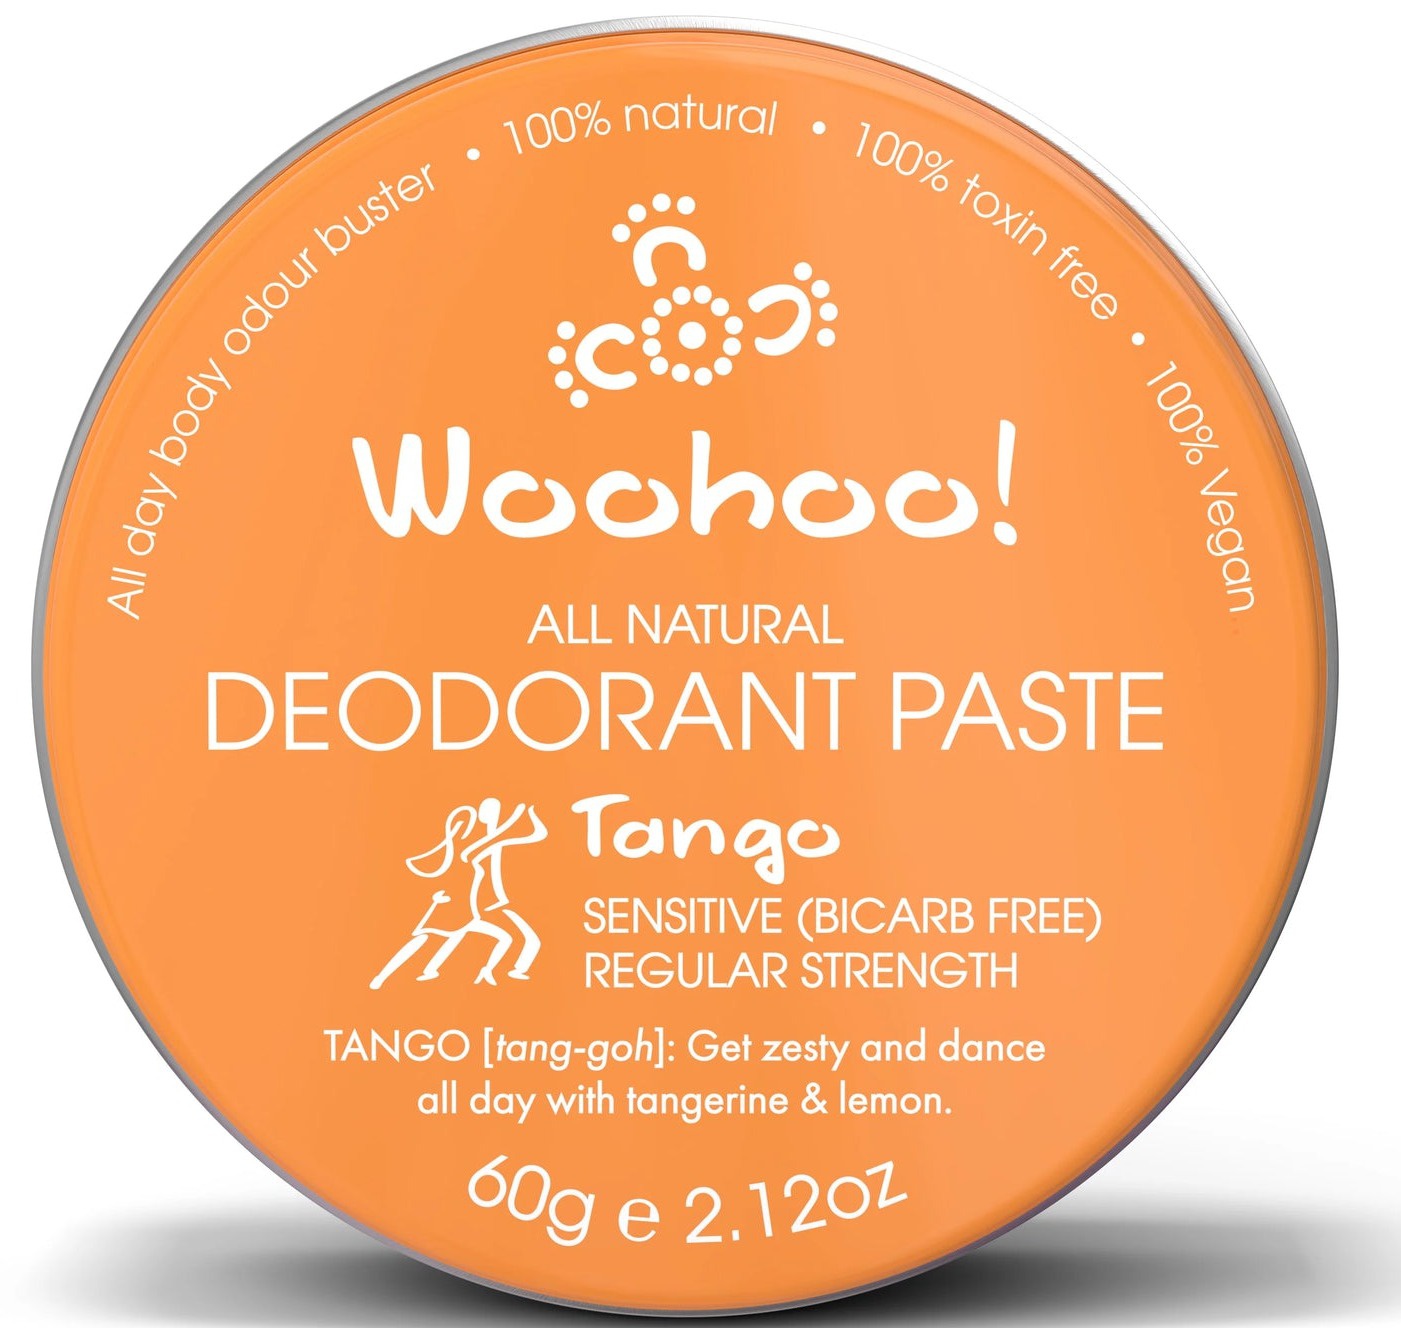 Woohoo All Natural Deodorant Paste (TANGO)